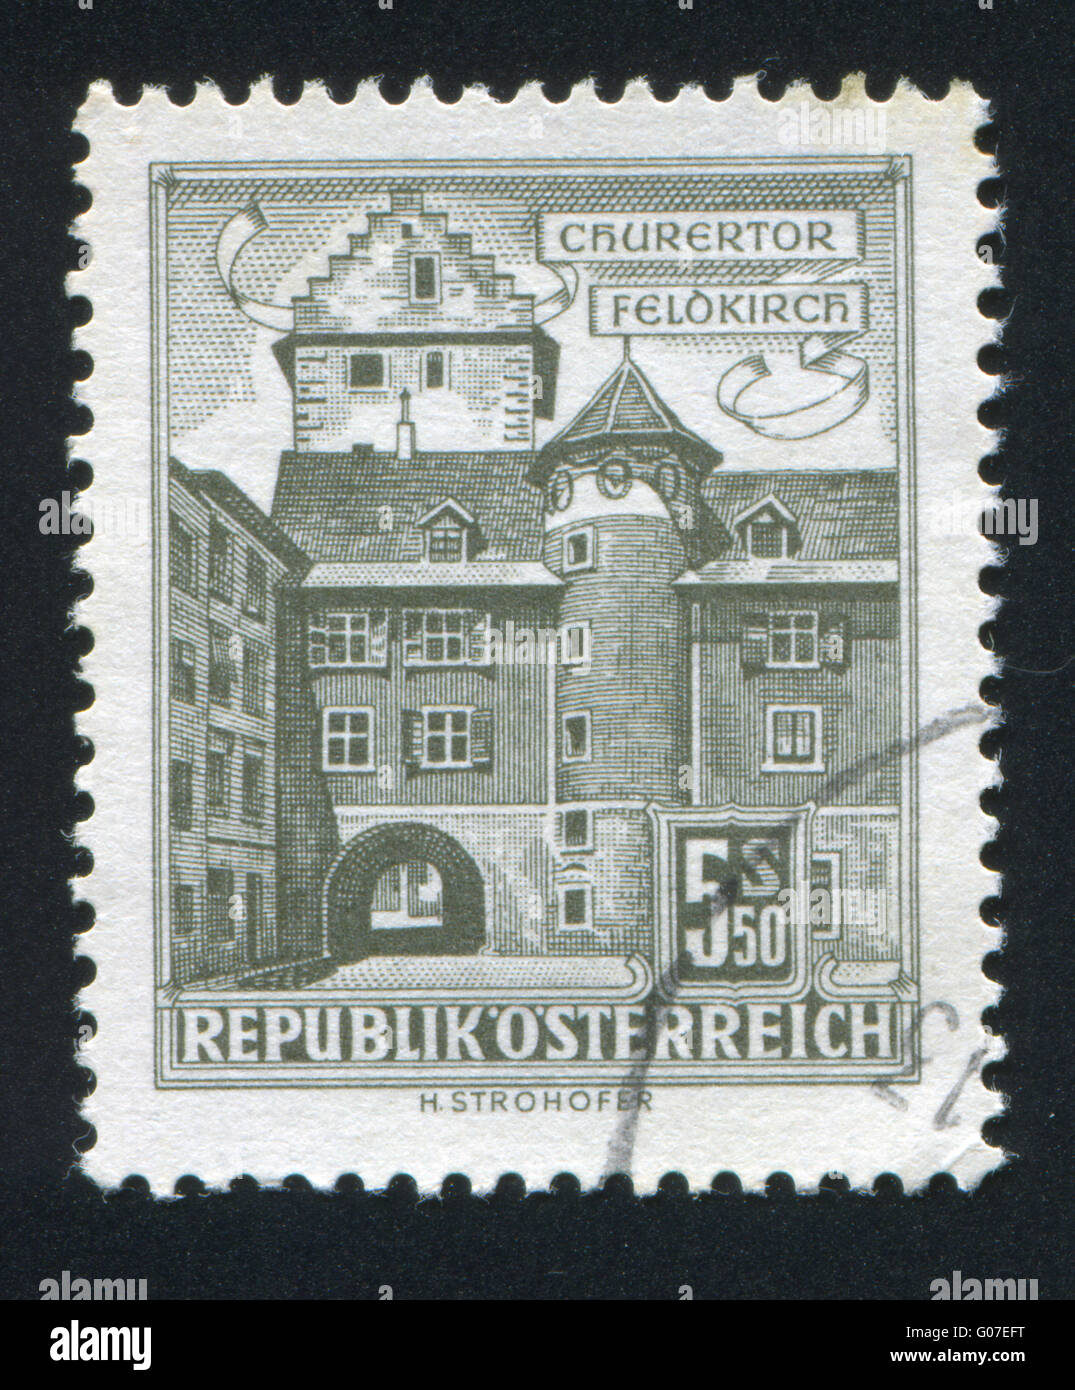 Austria stamp Stock Photo